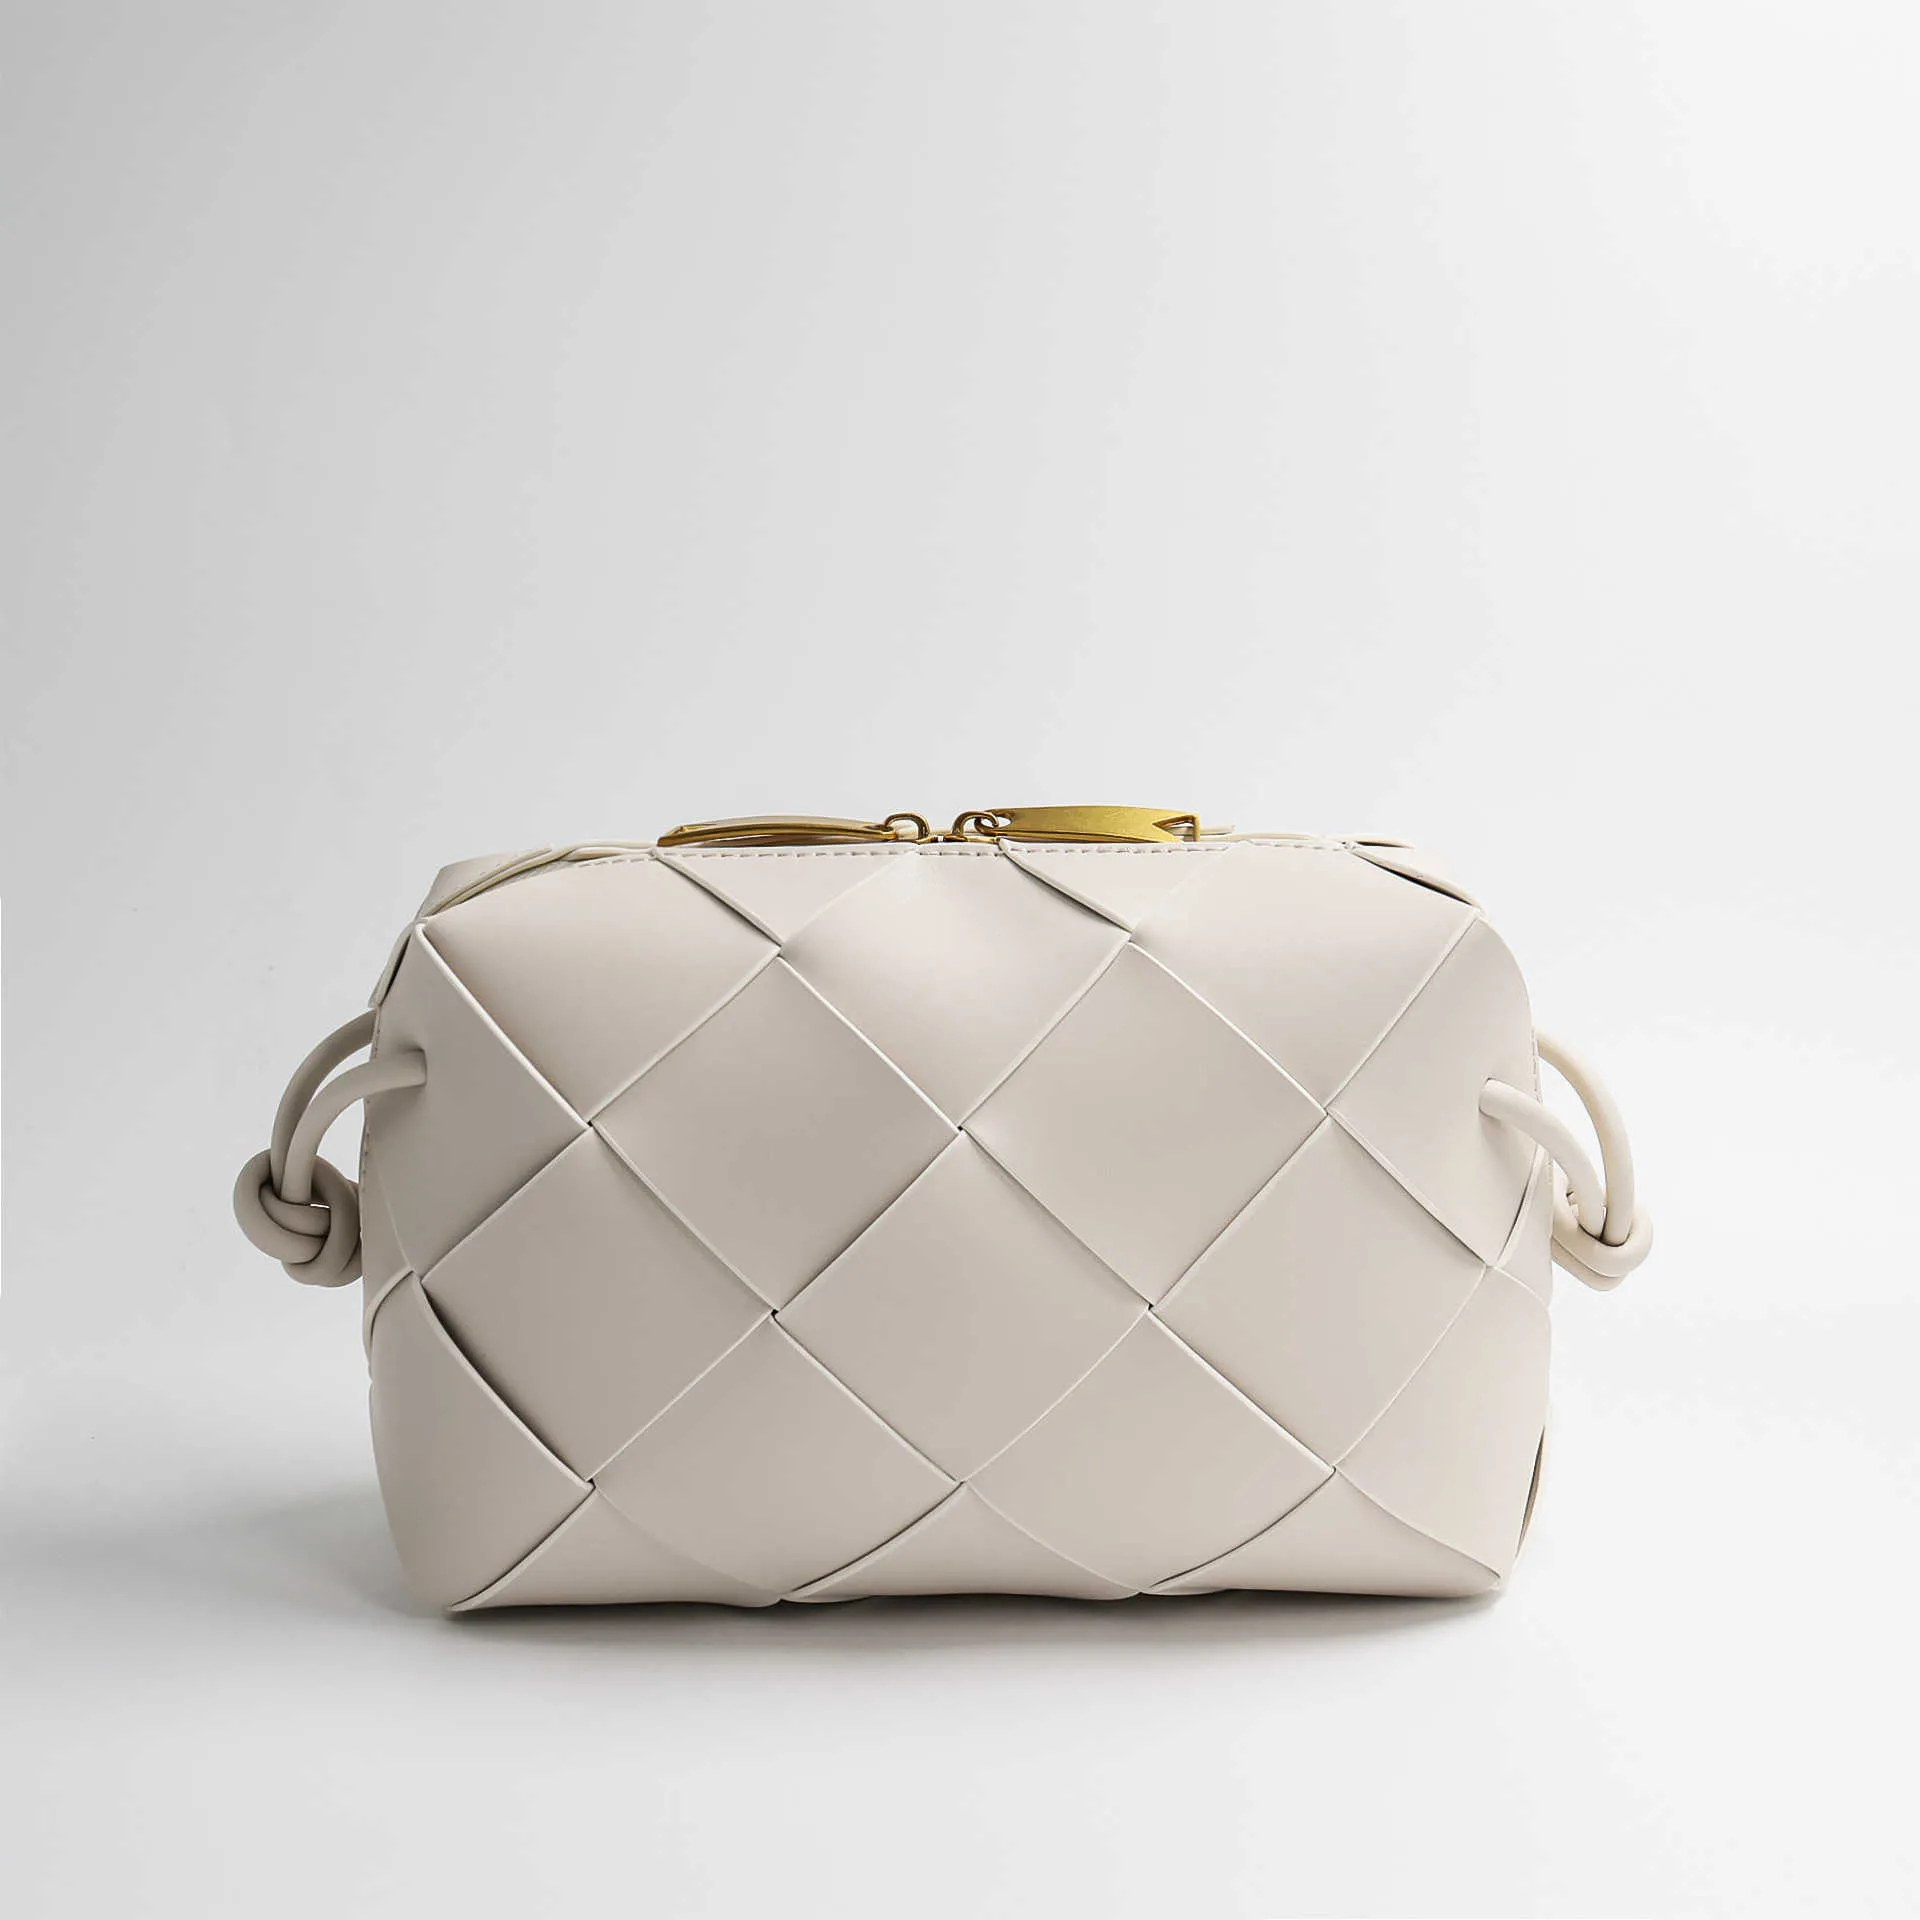 Handbags | Authentic TOUS Brand Premium Leather Bucket Bag | Freeup